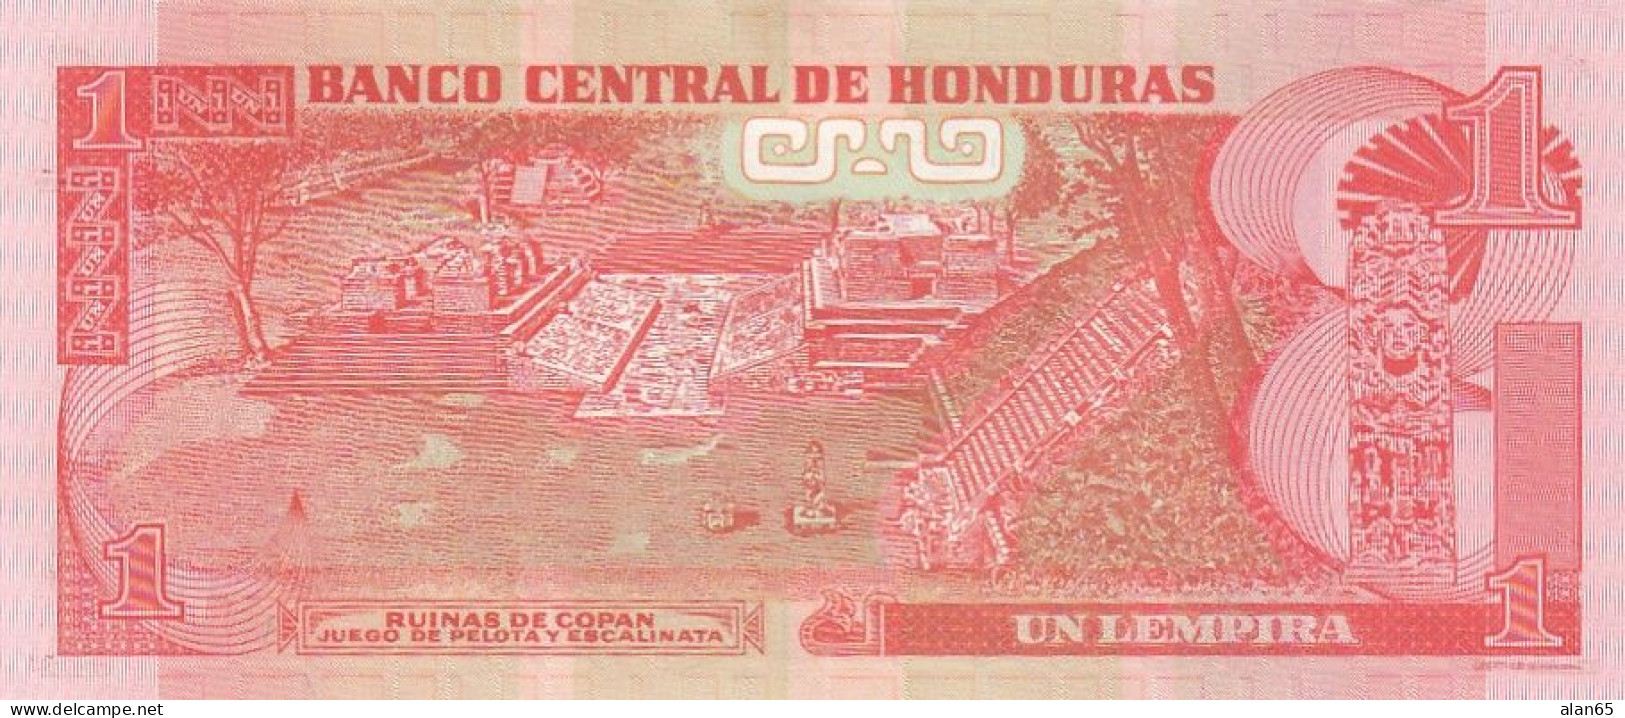 Lot Of 3 Honduras Banknotes #80Ae 2 Lempiras 2006, #80Ah 2 Lempiras 2010, #89b 1 Lempira 2010 - Honduras